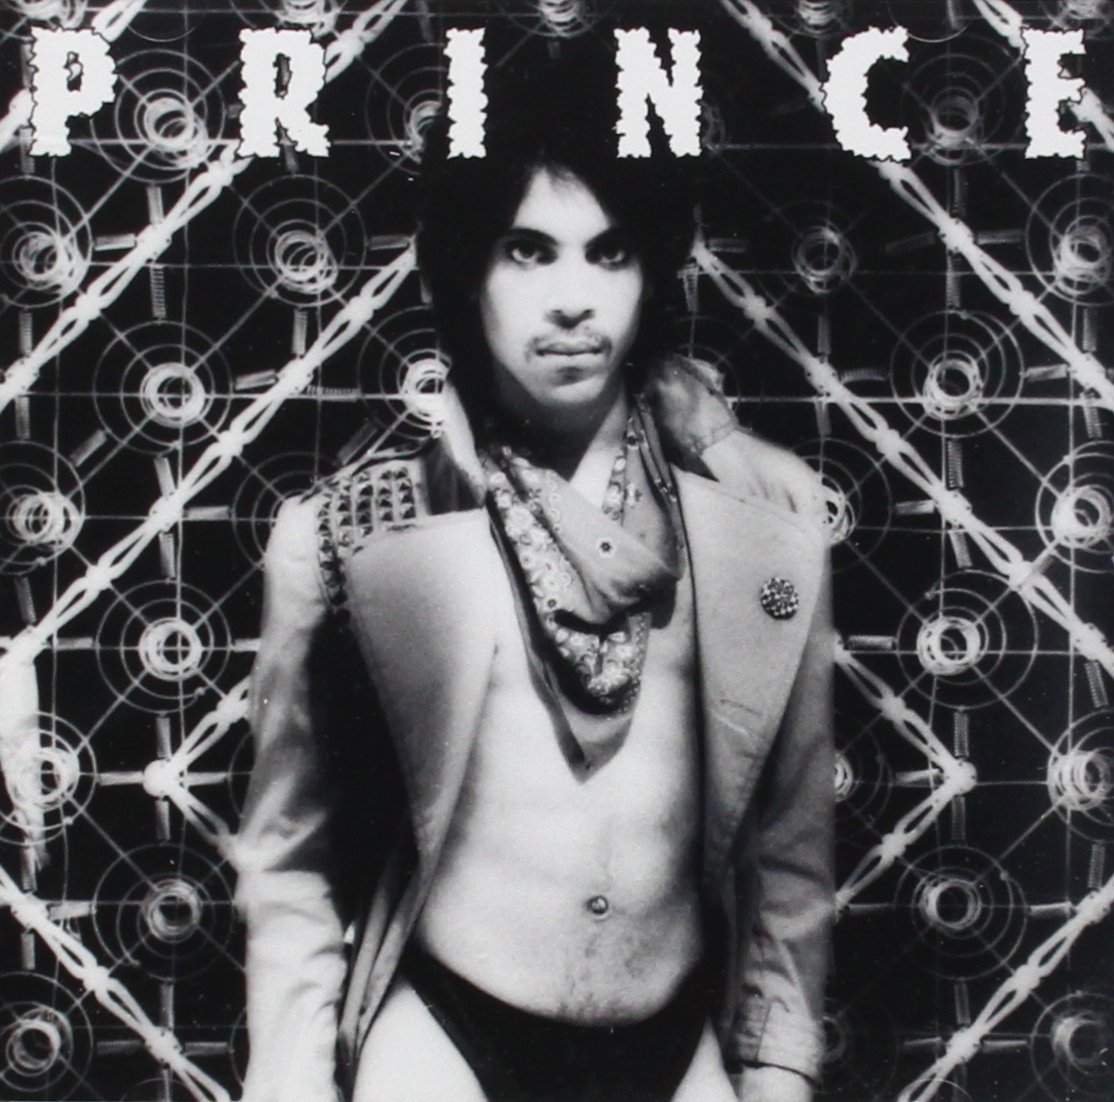 Prince Dirty Mind LP